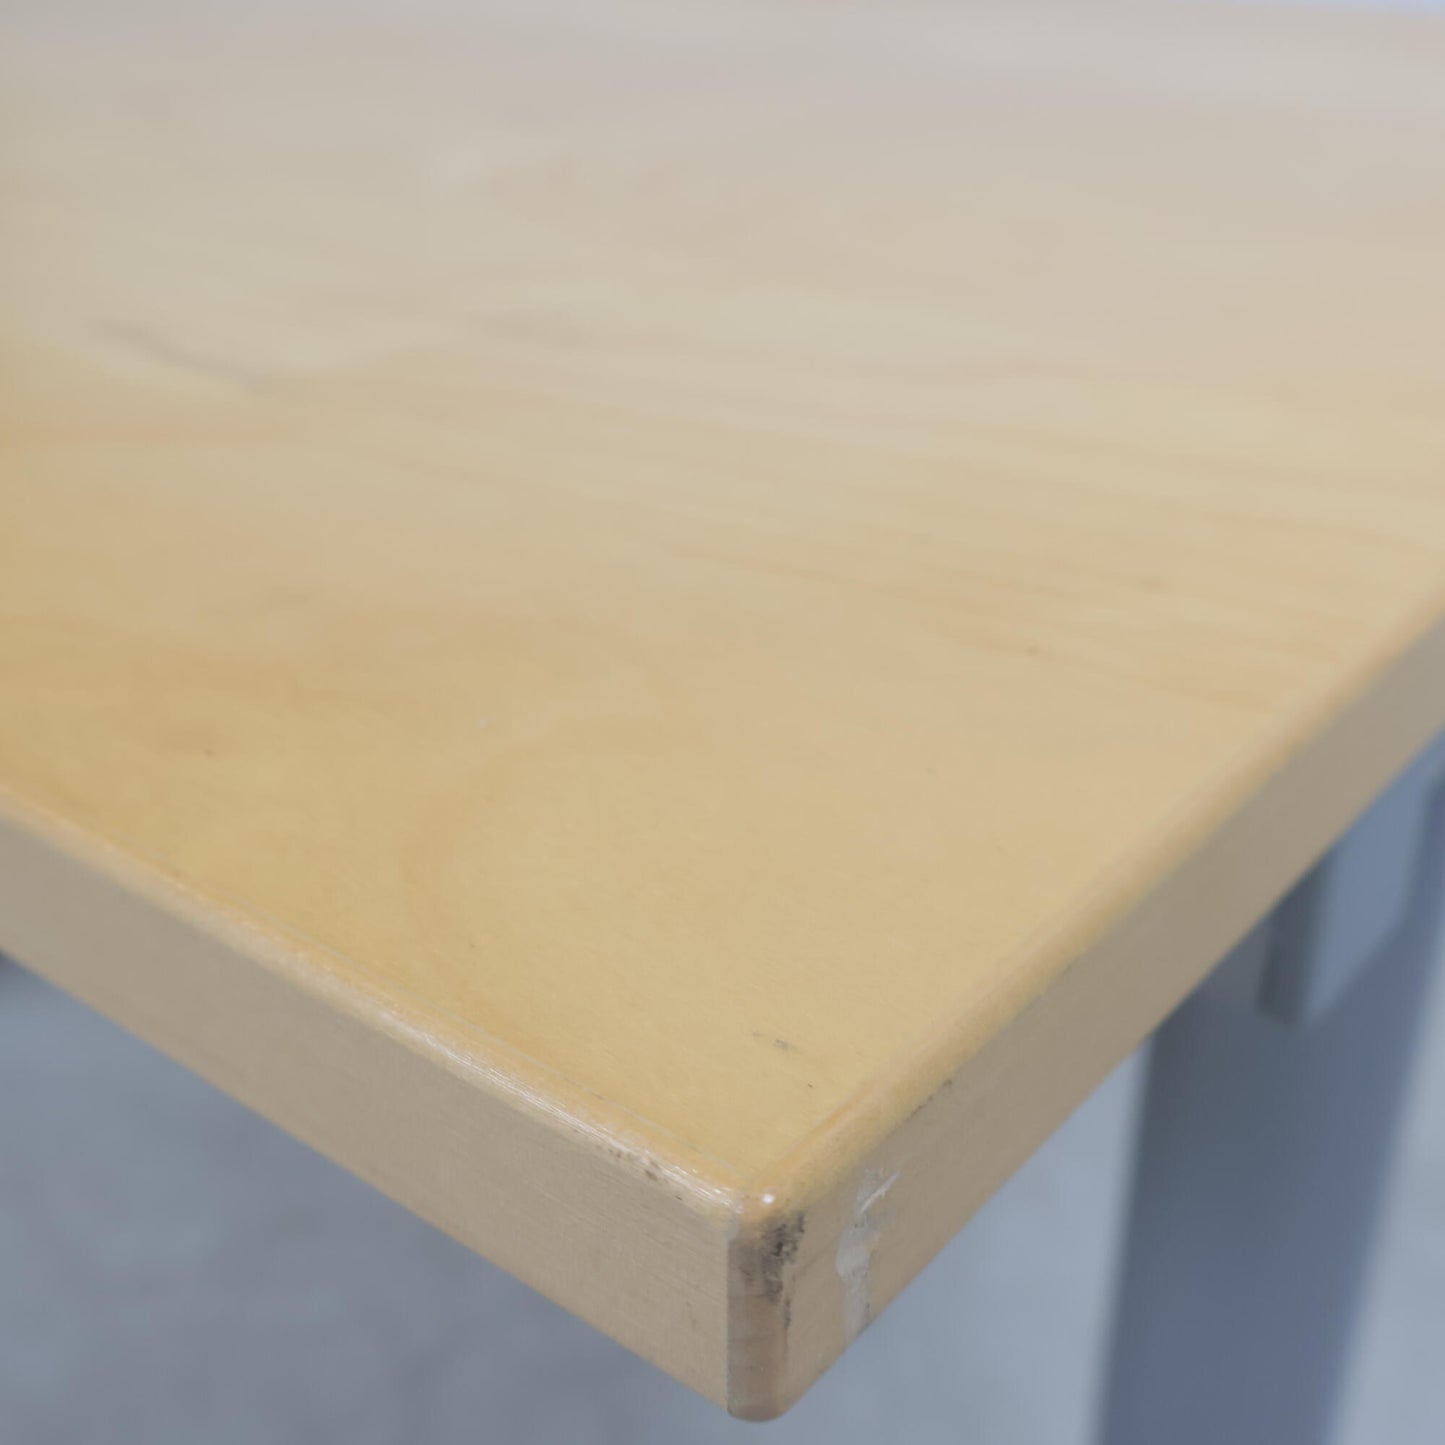 Kvalitetssikret | IKEA Galant manuelt hev/senk skrivebord 120x160